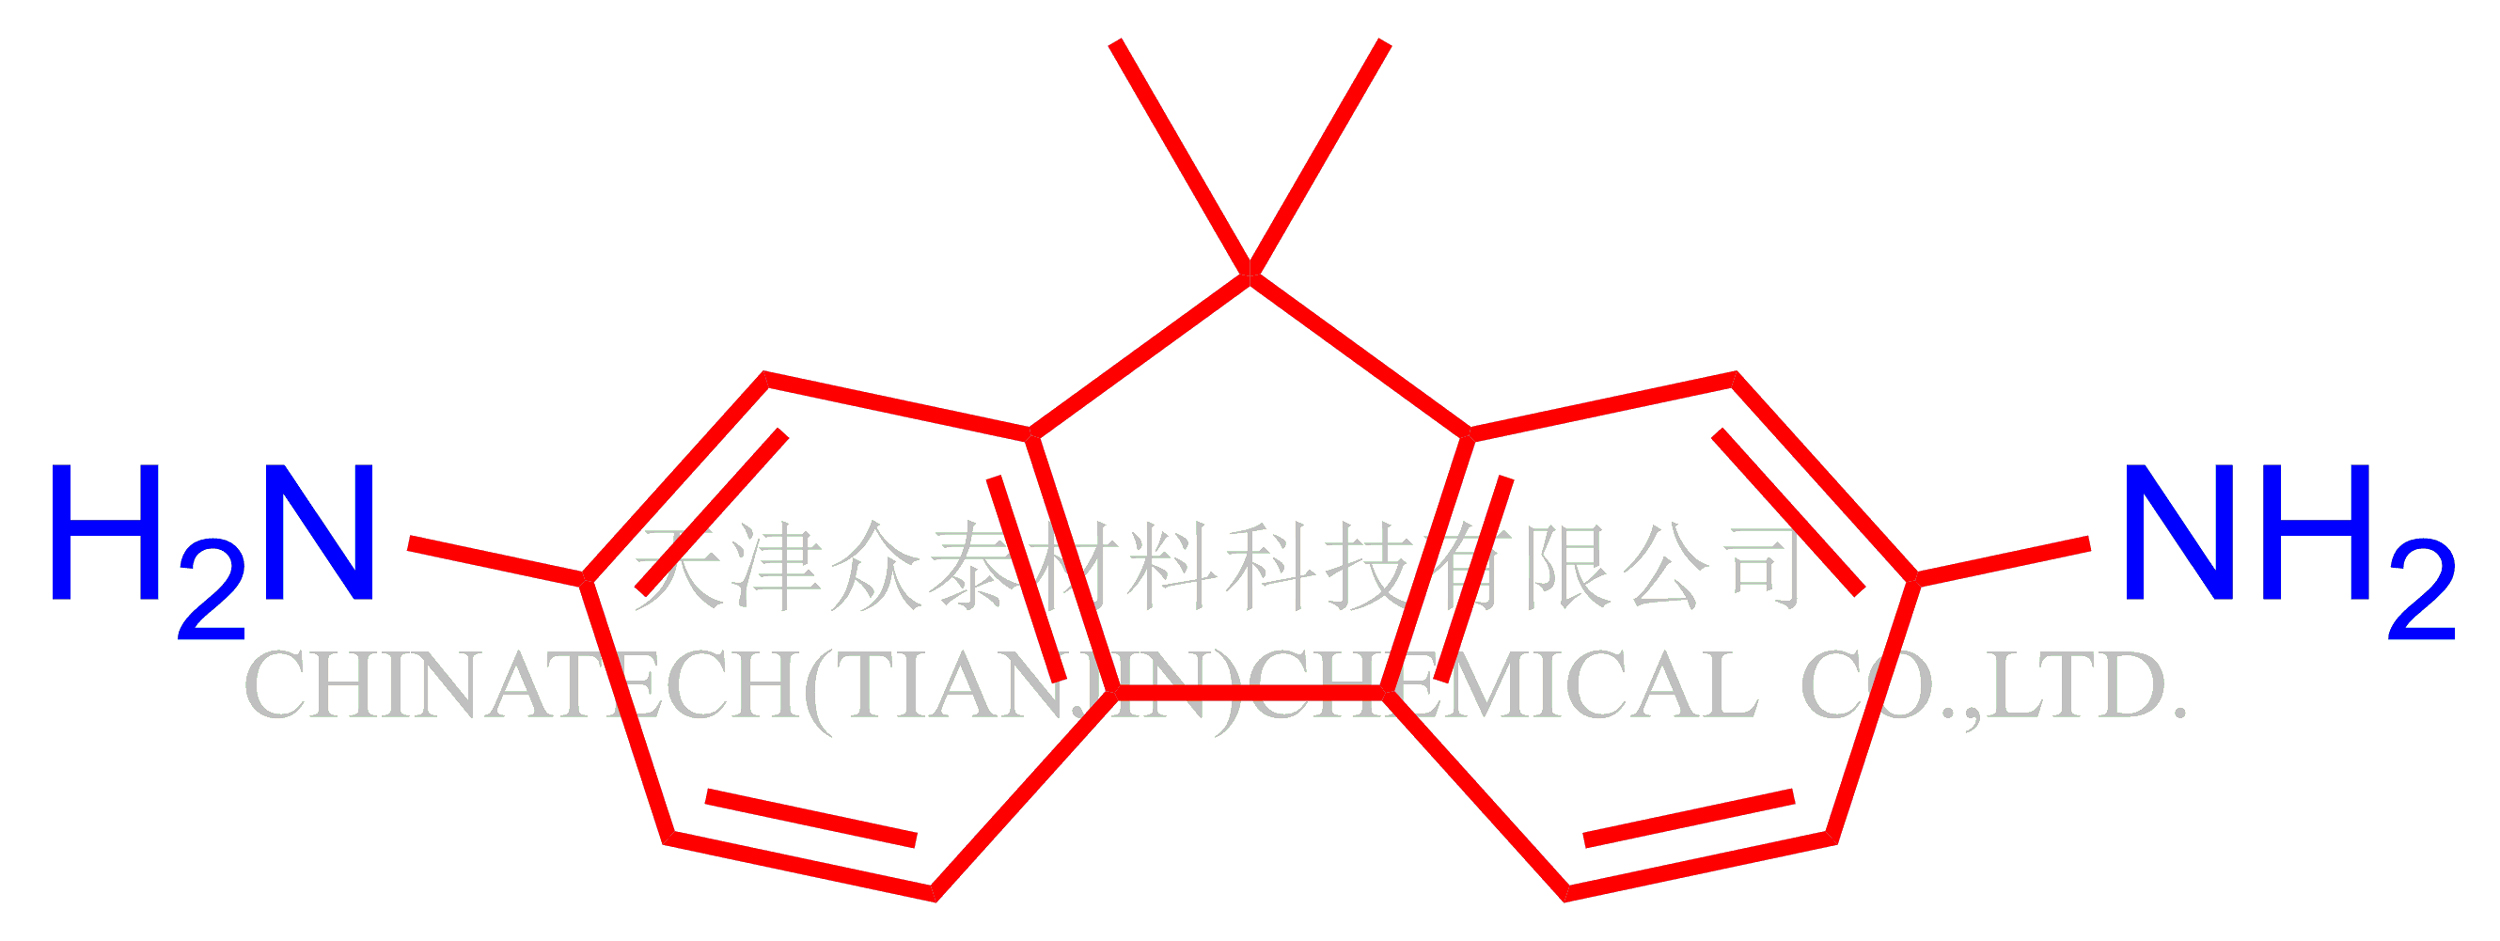 9,9-二甲基芴-2,7-二胺(S-A-1),9,9-dimethyl-9H-fluorene-2,7- diamine (S-A-1)